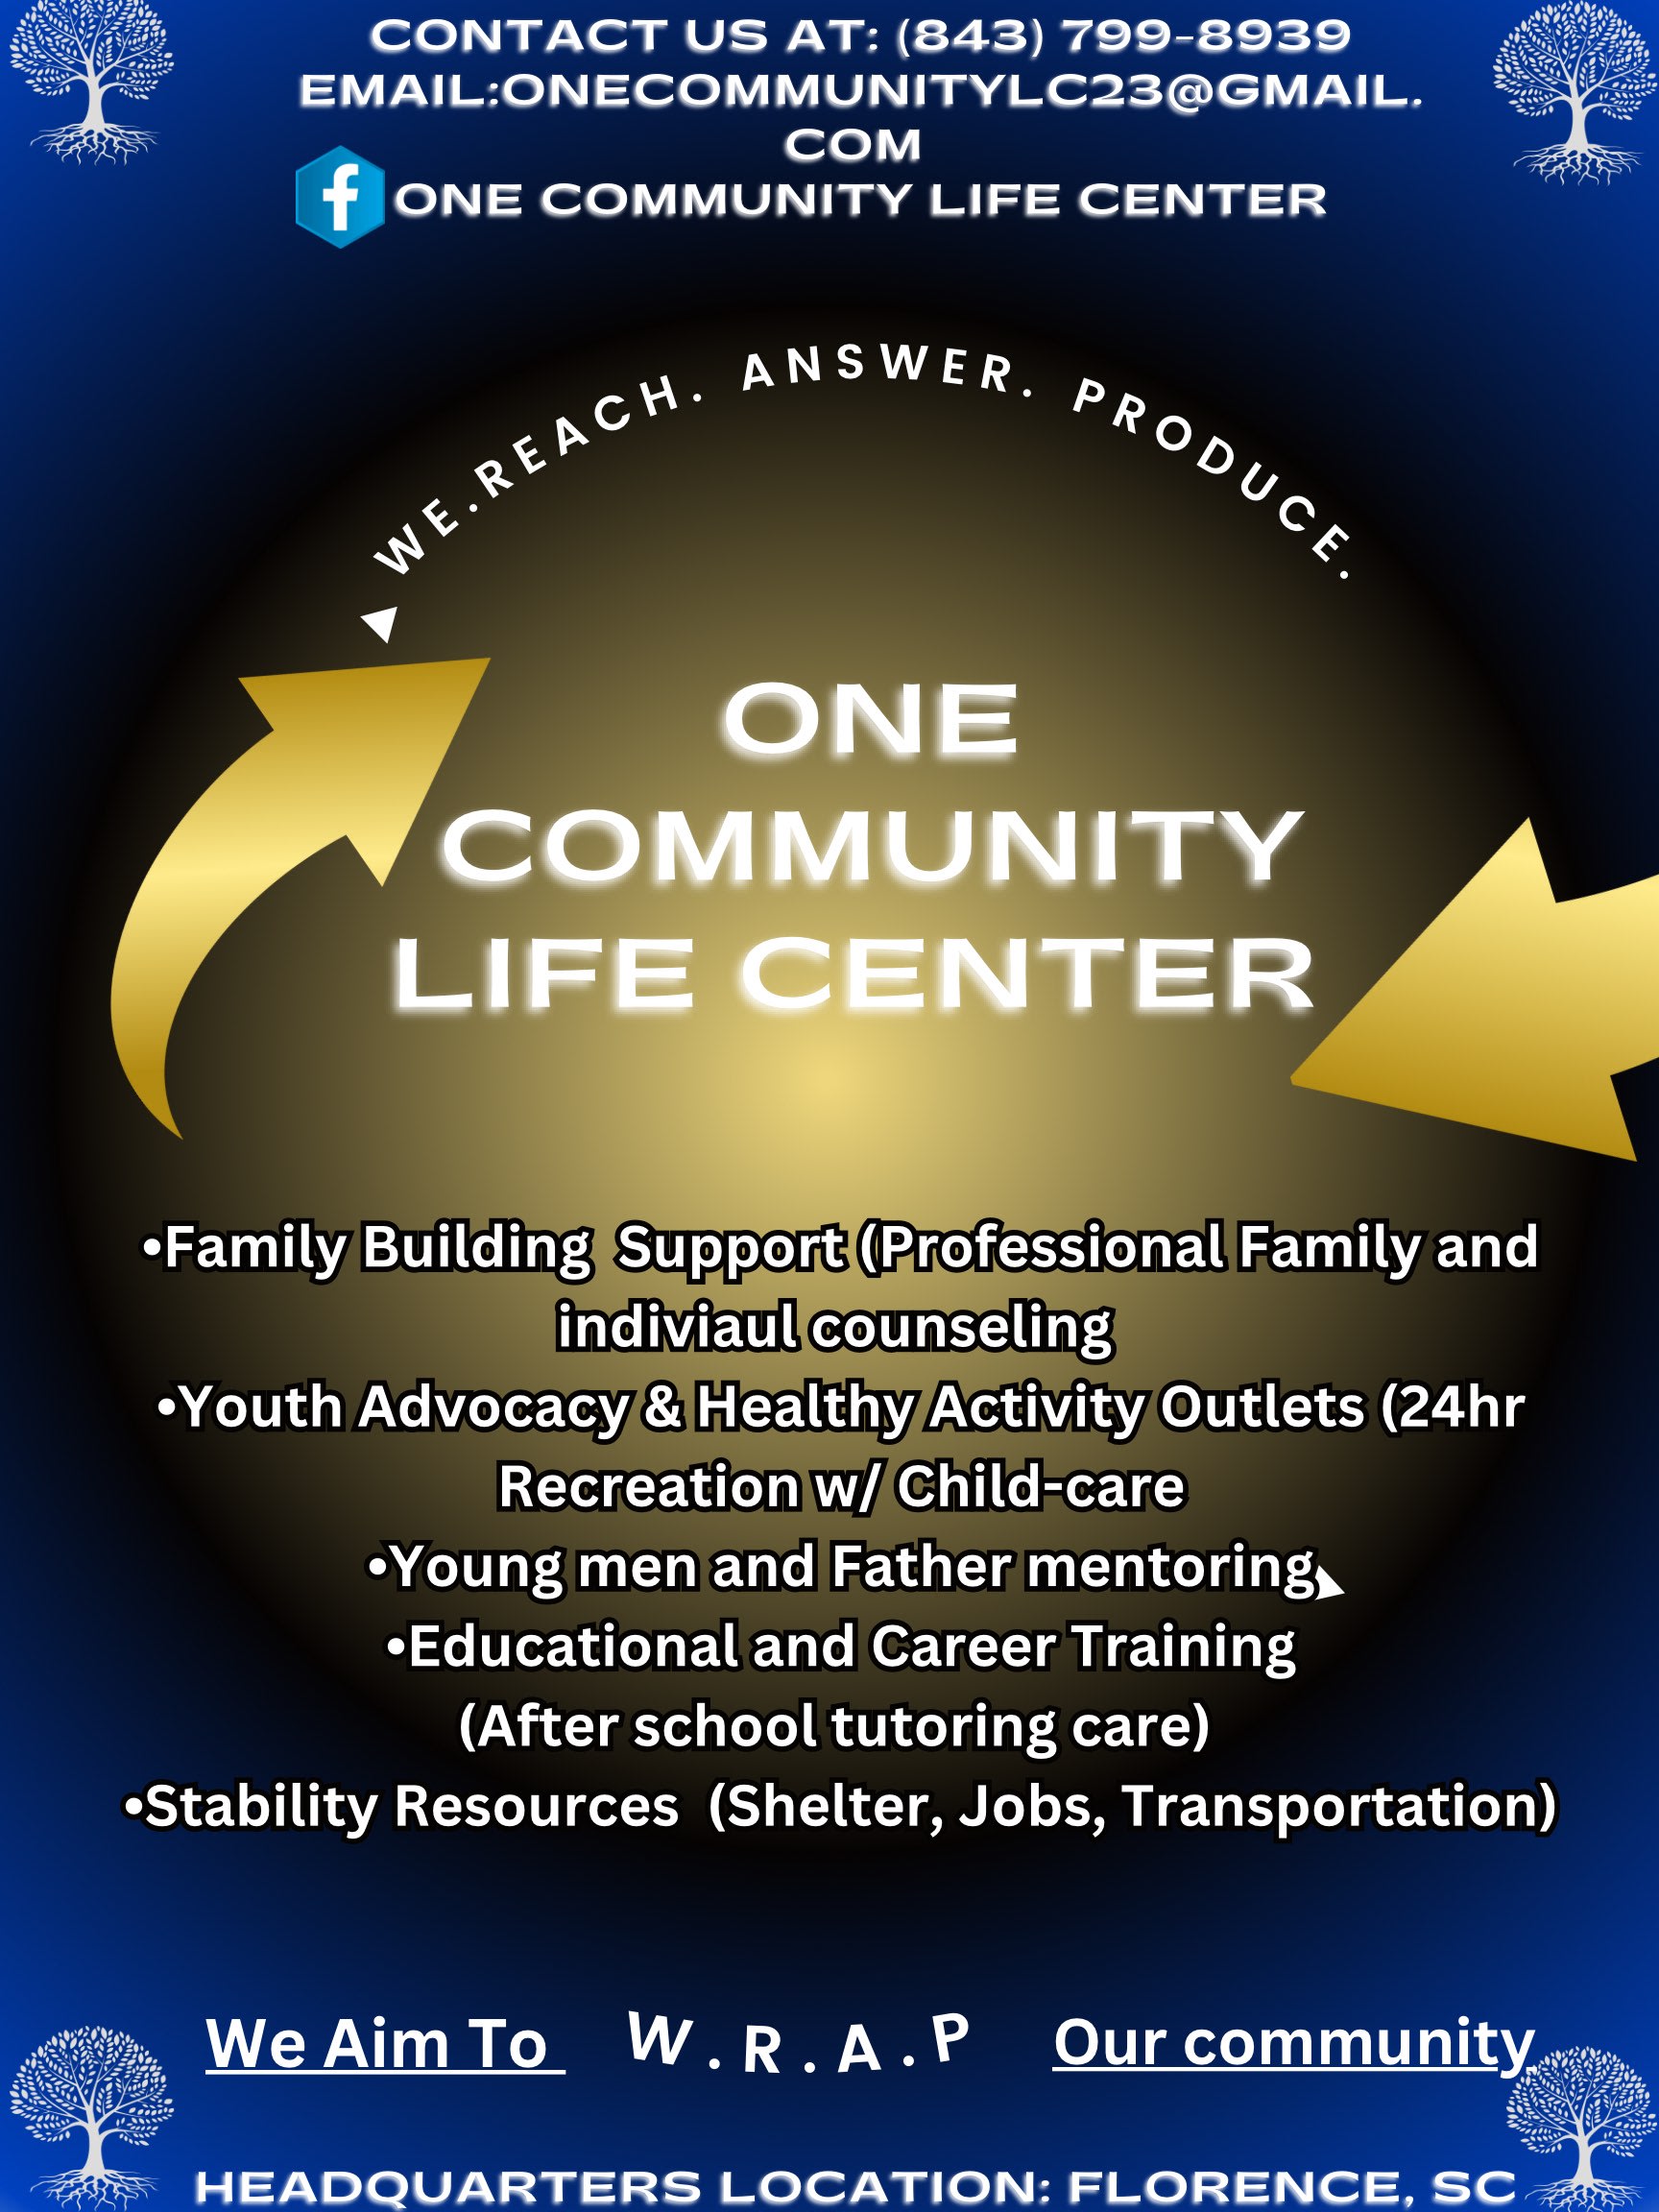 One Community Life Center